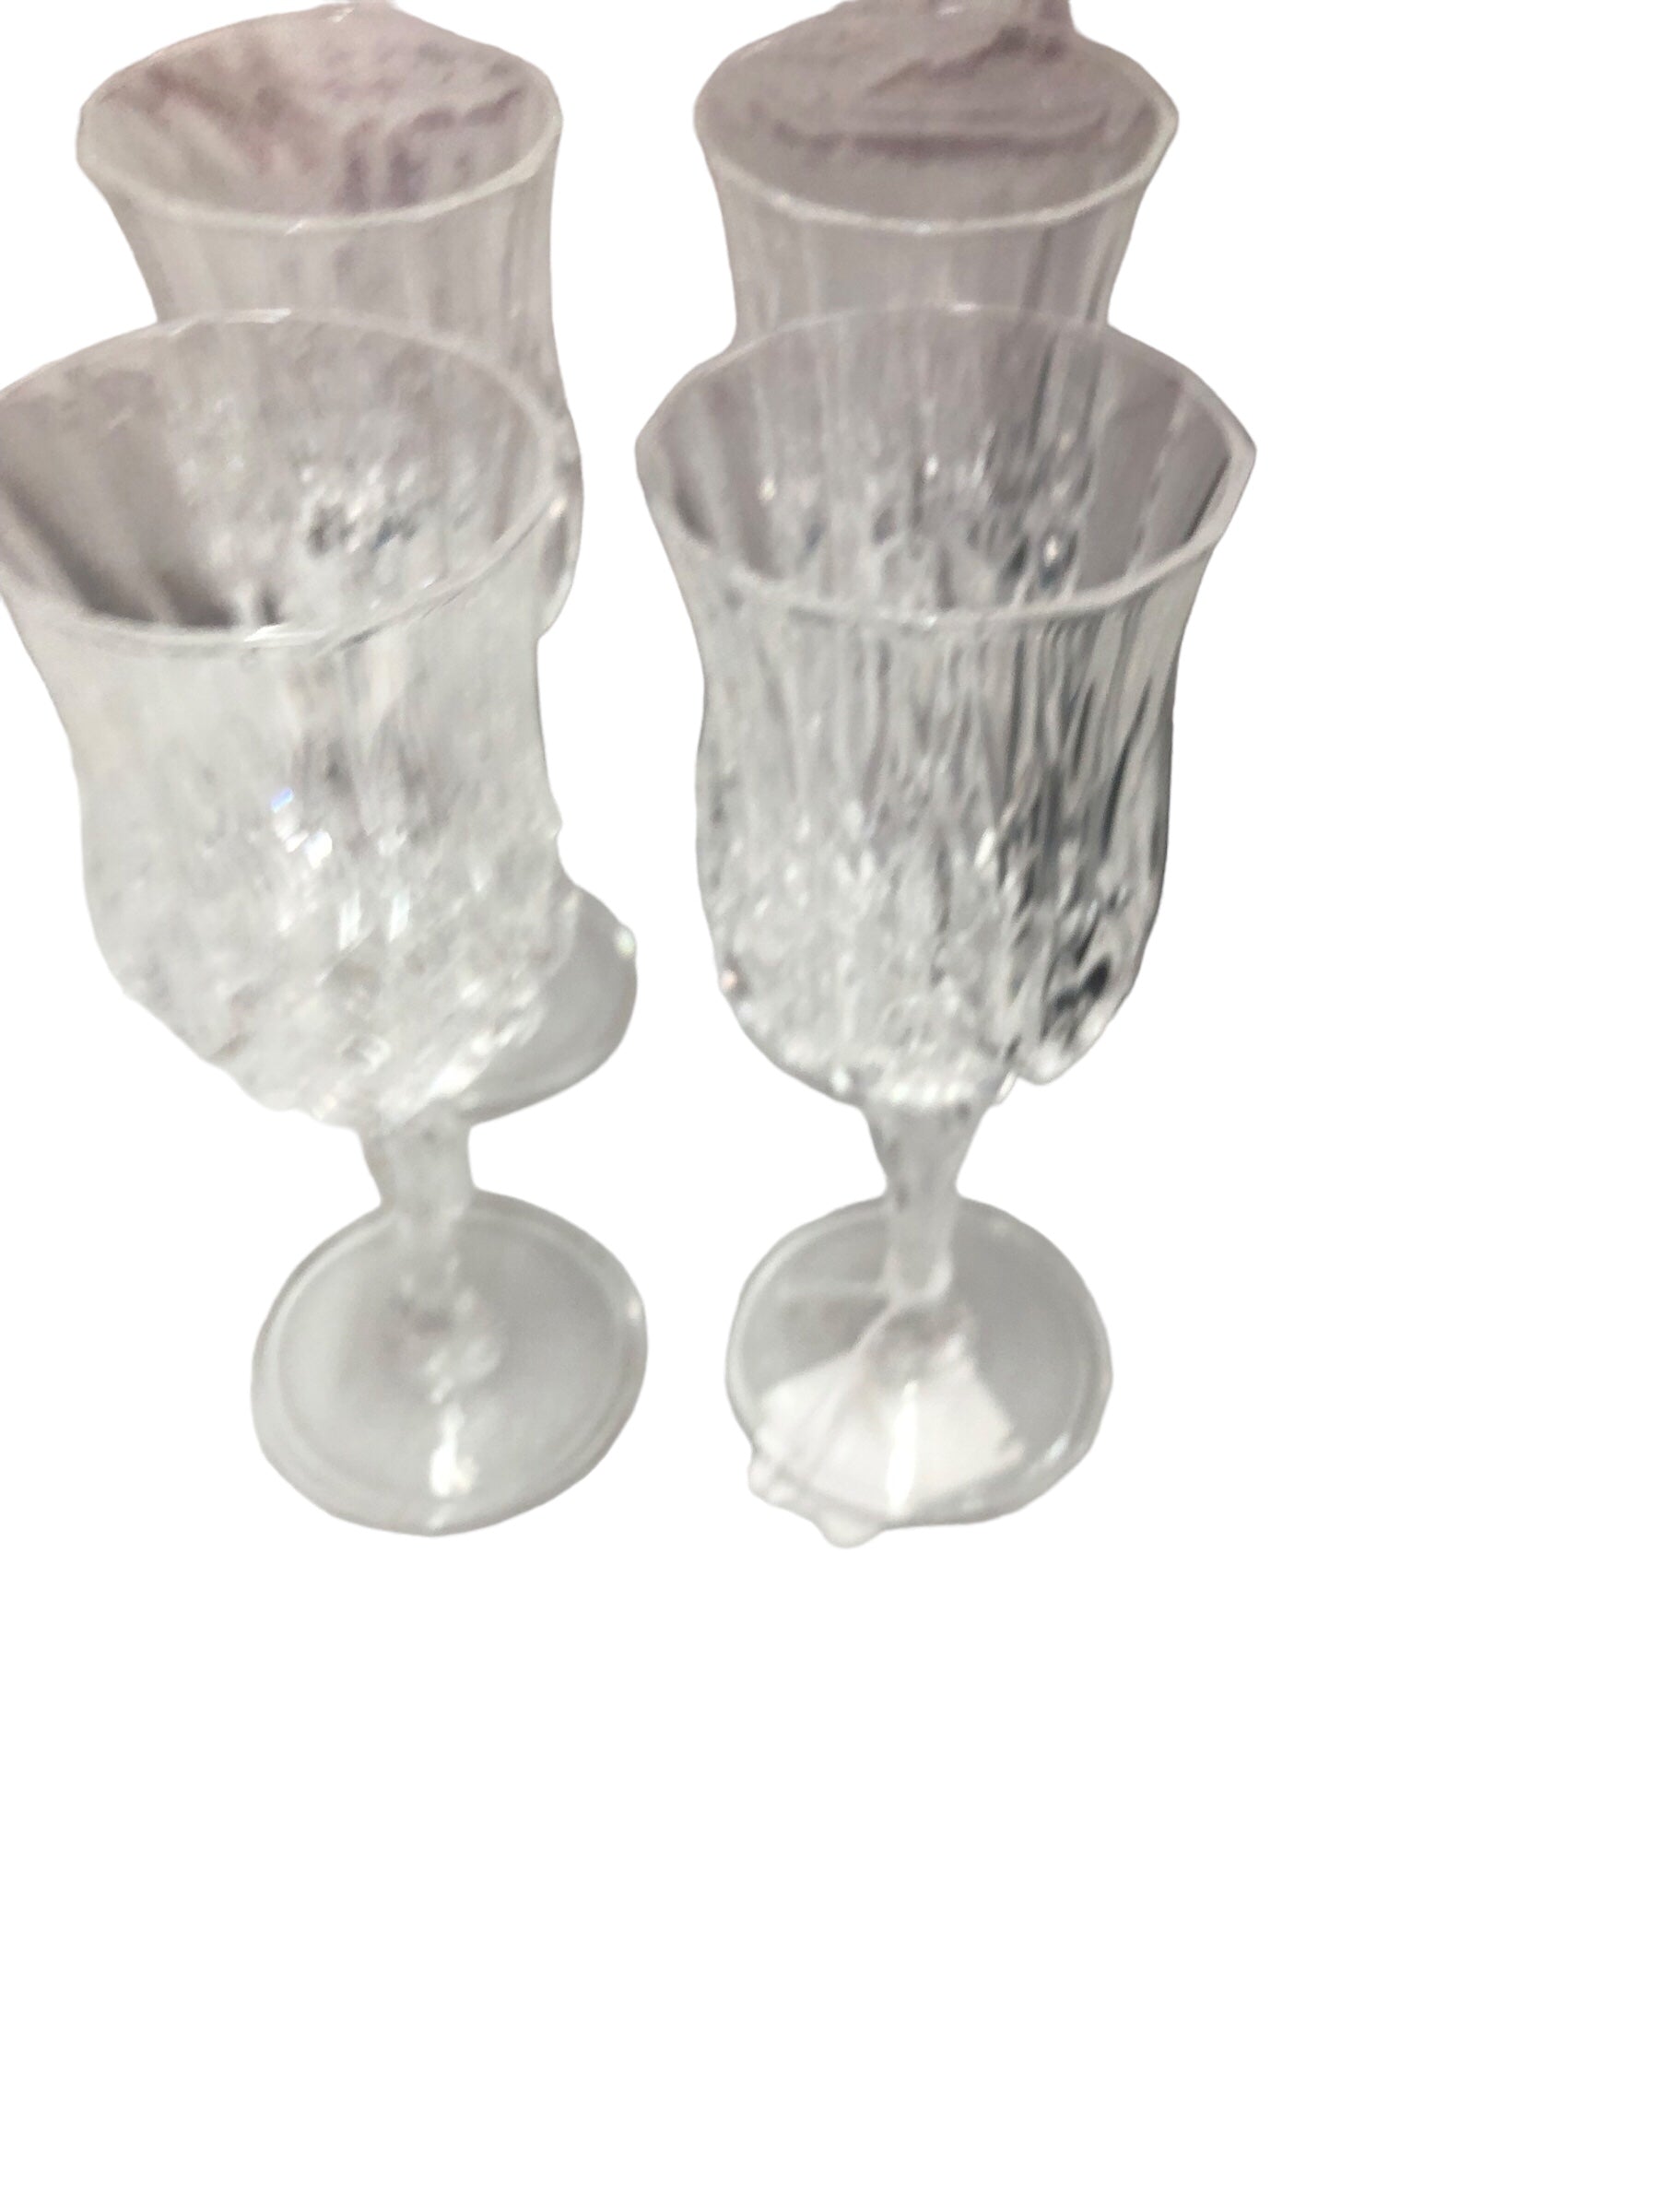 White wine crystal glasses